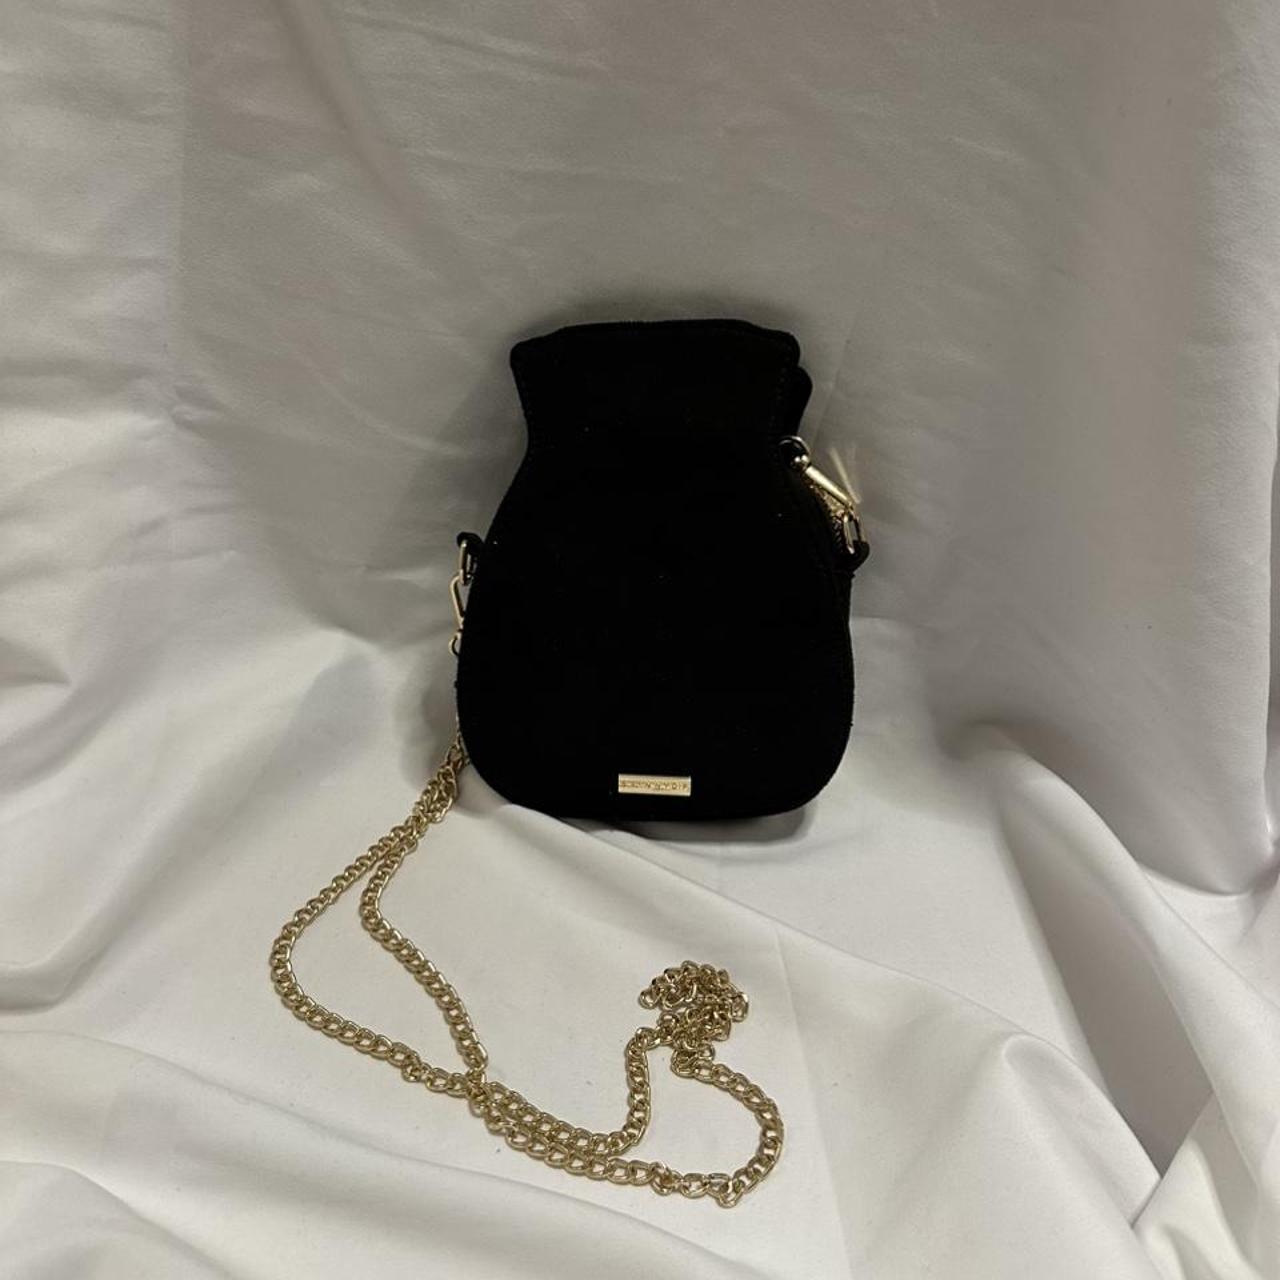 Product Image 2 - Gold and black rhinestone bag.